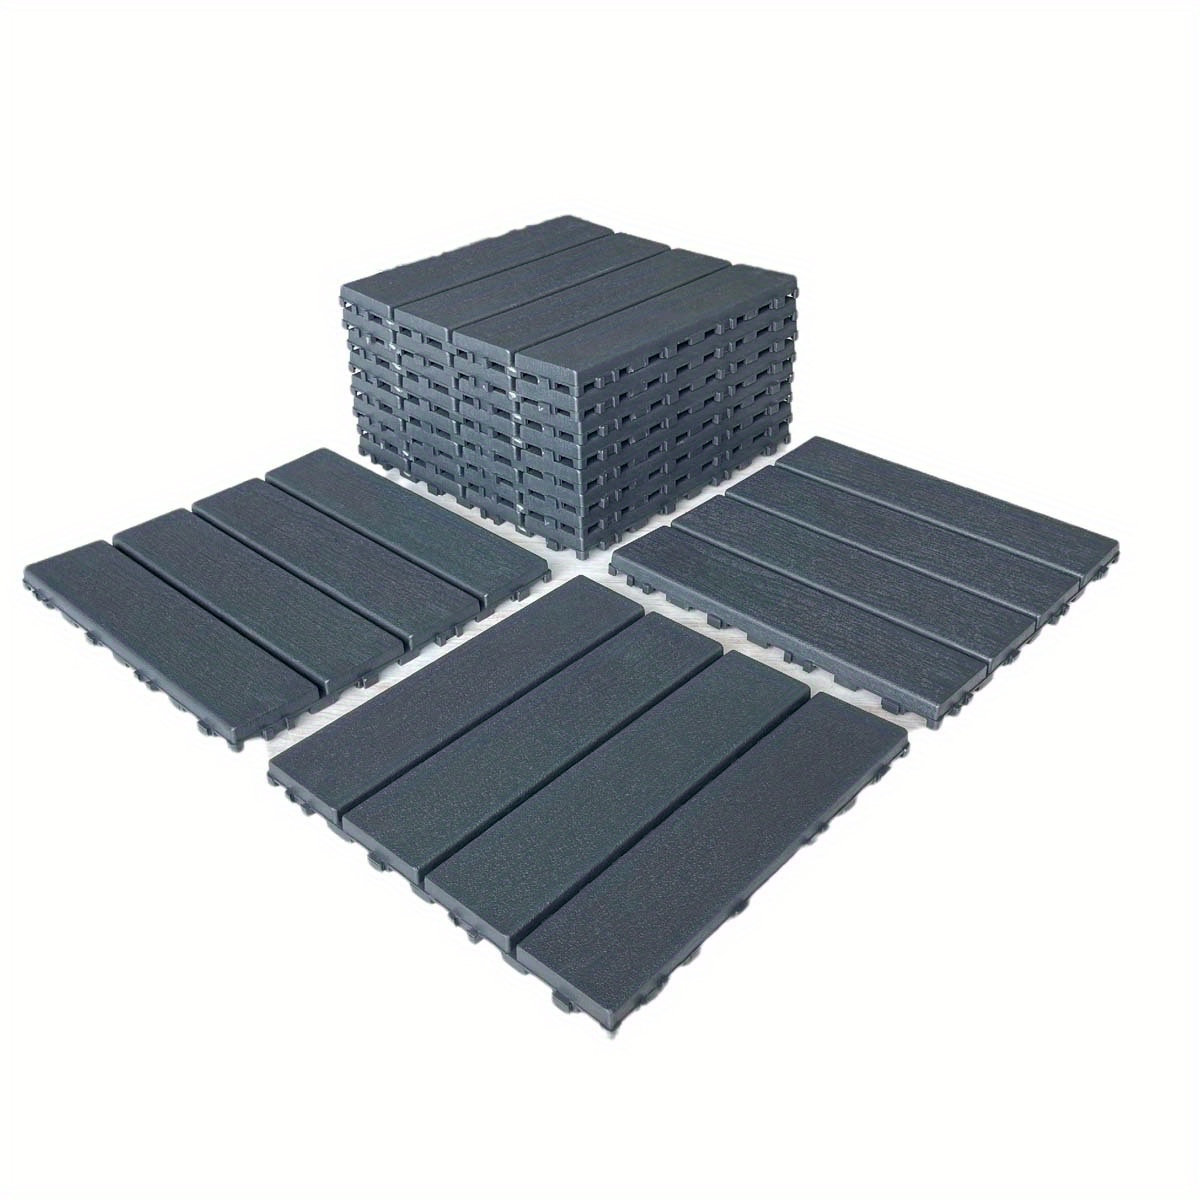 

Plastic Interlocking Deck Tiles, 44 Pack Of Deck Tiles, 12"x12" Portable Square Waterproof Non Slip Security Design Outdoor All Day Use, Pool Side Balcony Backyard Patio Garden Floor Tiles, Dark Grey